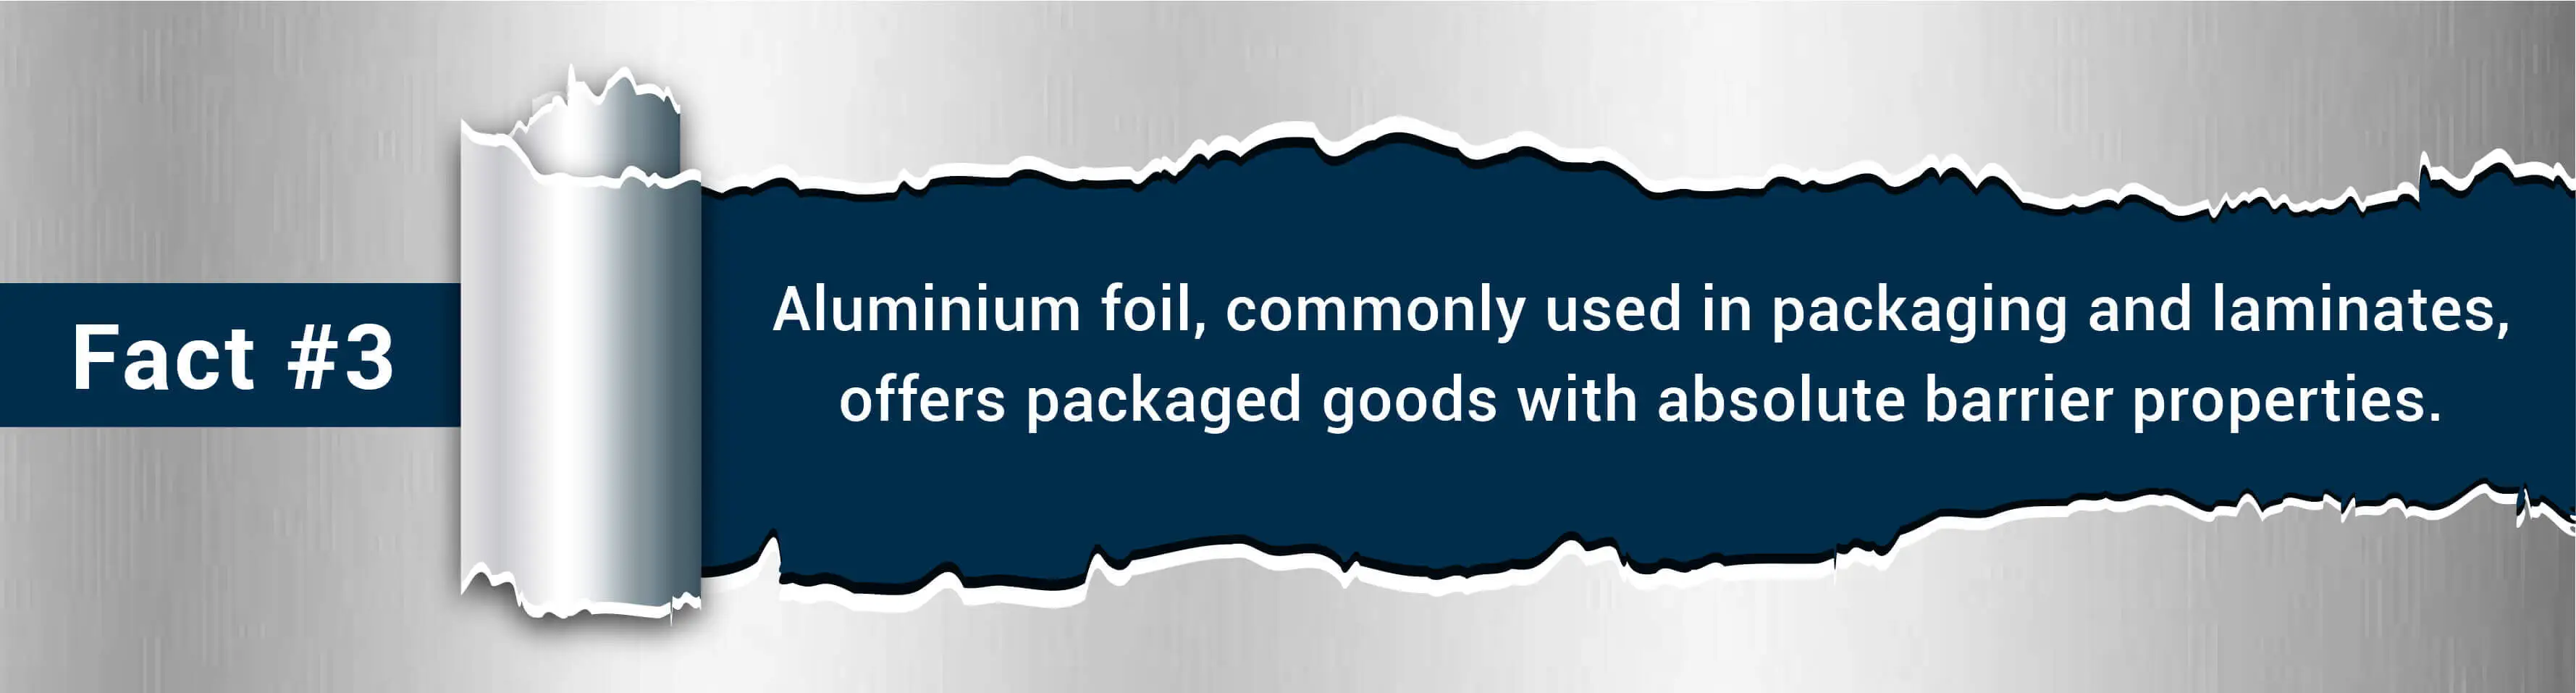 aluminium foil fun facts